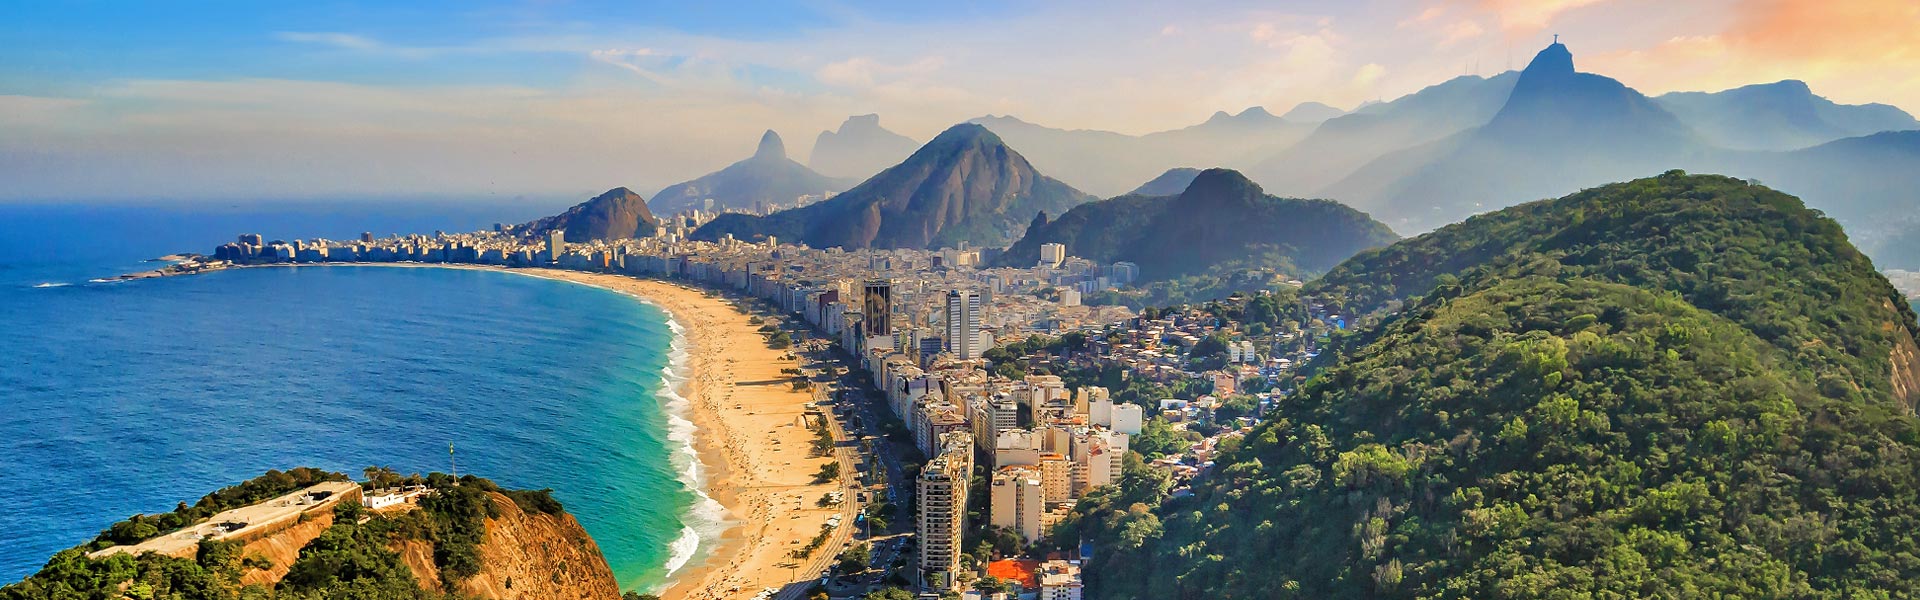 Aerial view of Copacabana with ocean, beach, mountains and buildings in Rio de Janeiro, Brazil